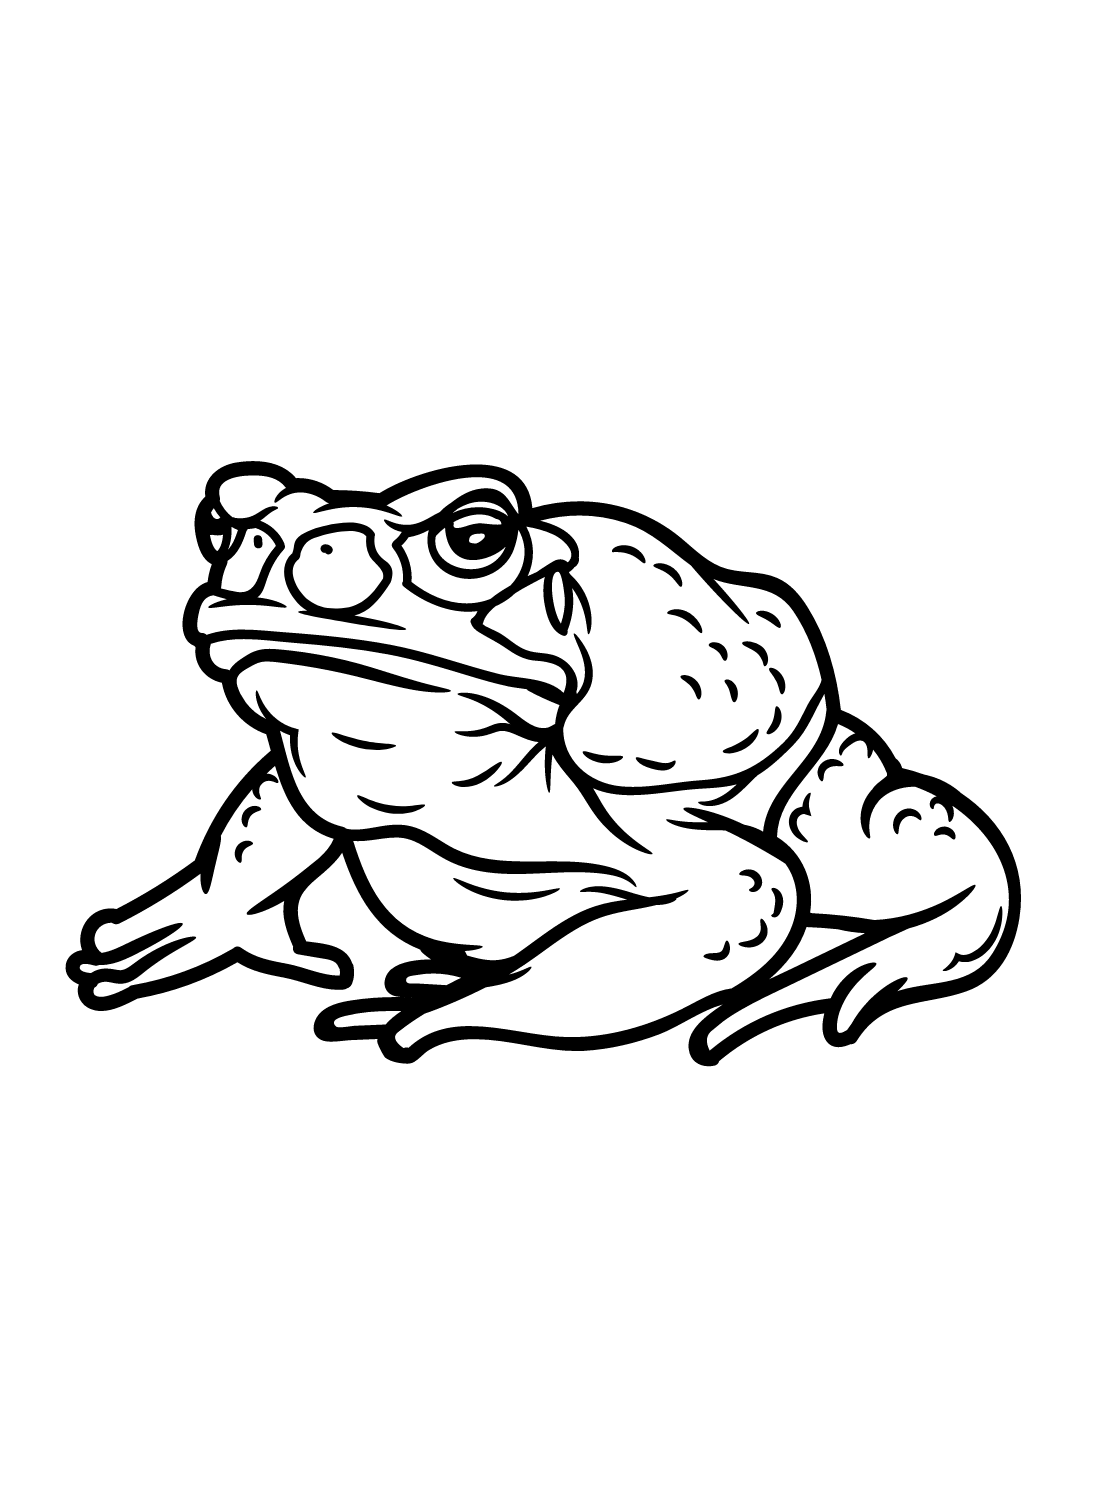 Toad Simple von Toad